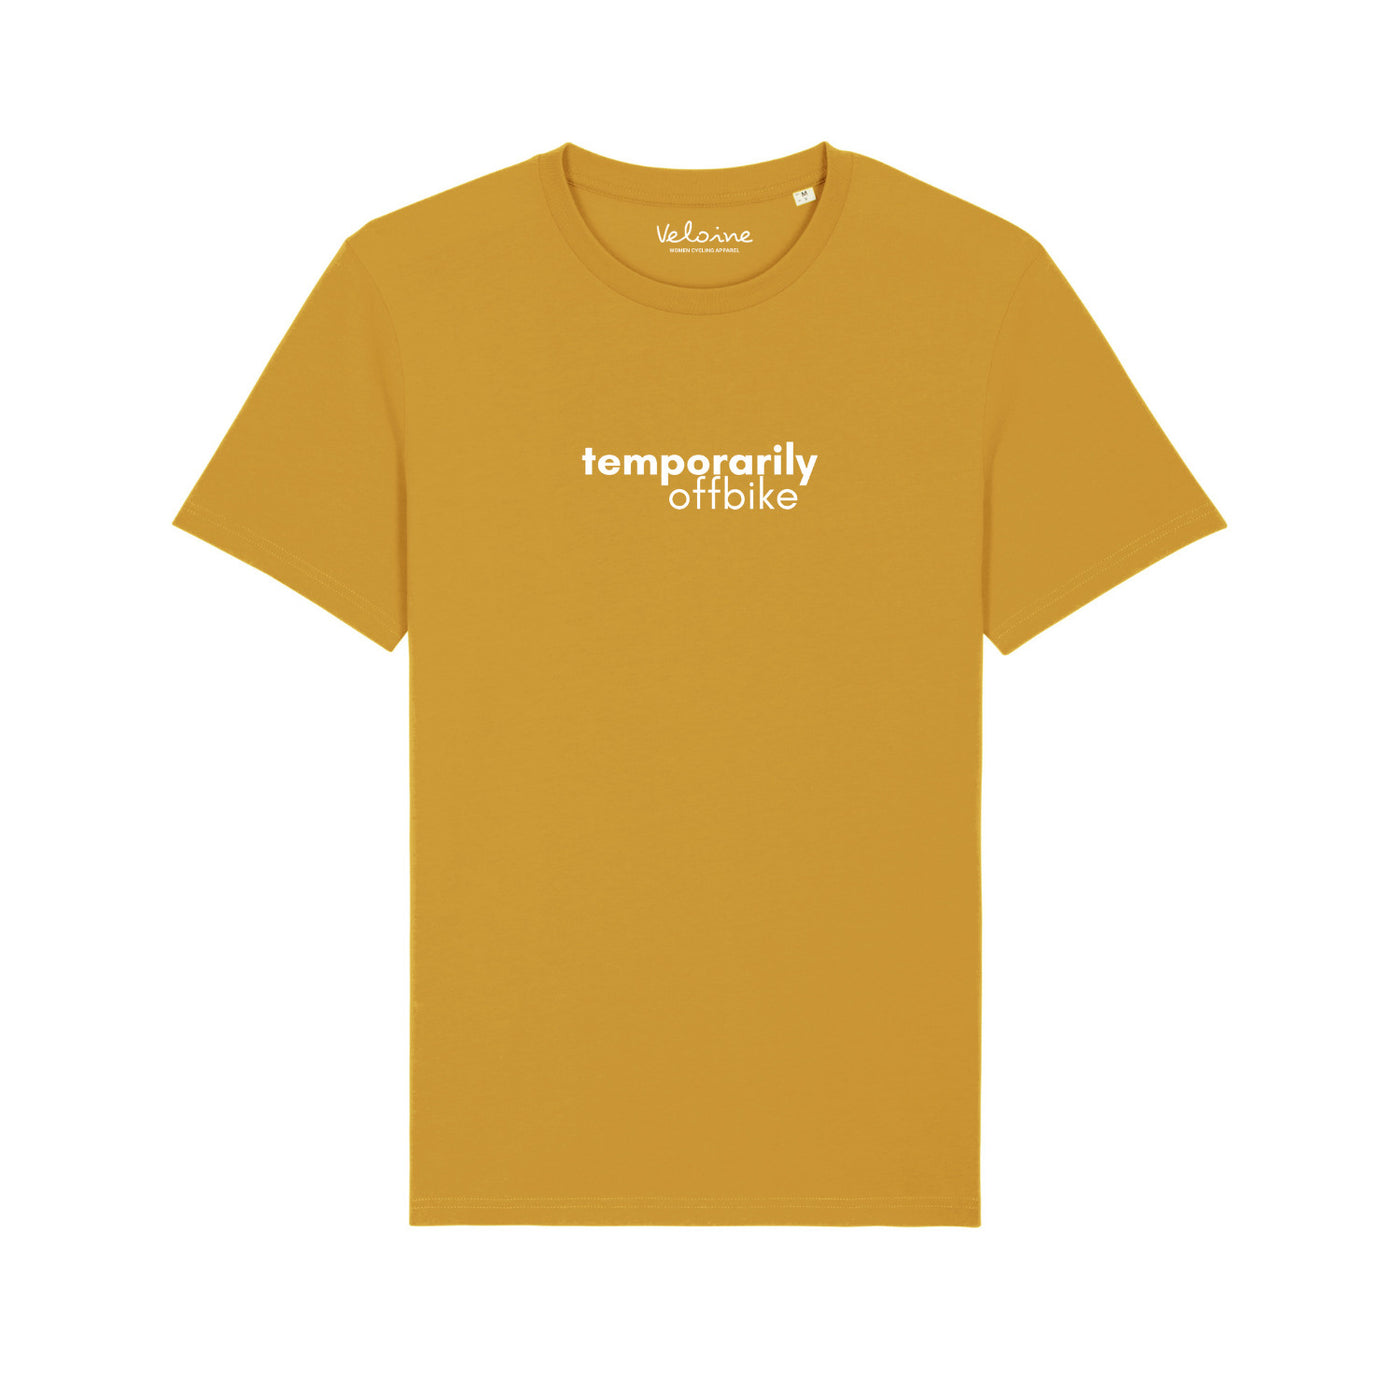 Shirt - temporarily offbike - Mustard